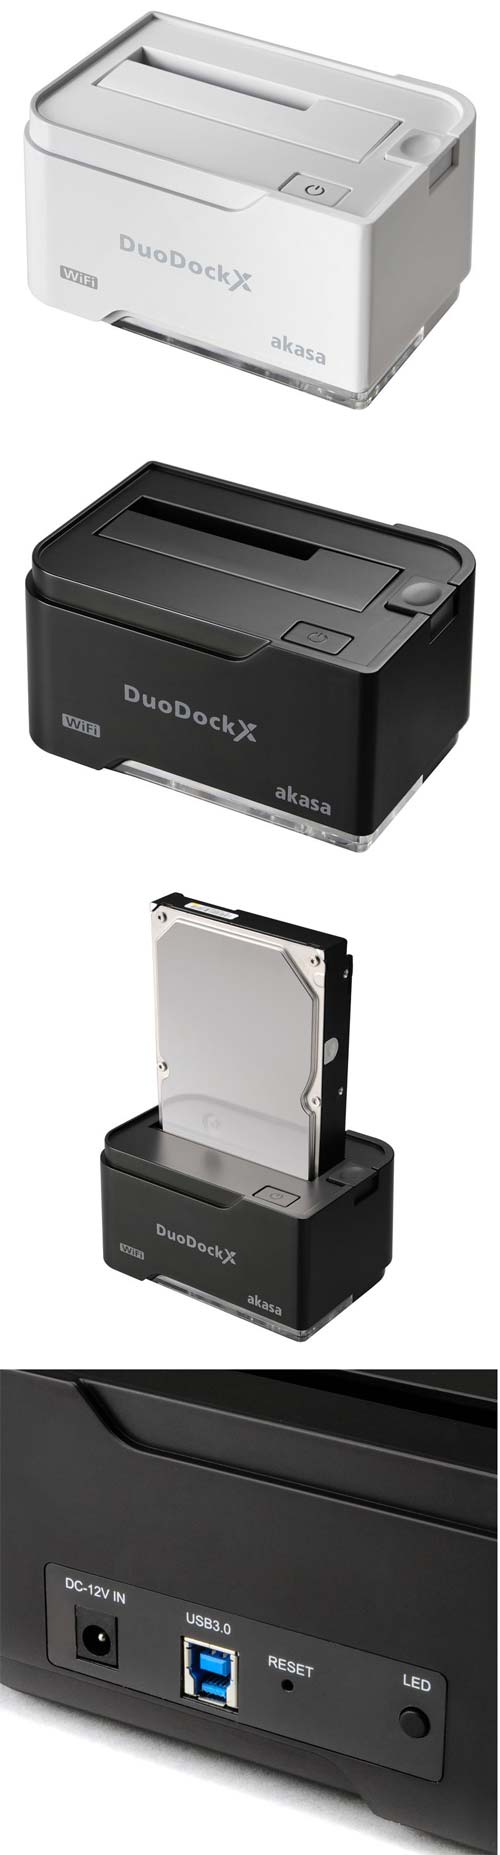 Навороченная док-станция DuoDock X WiFi HDD Dock от Akasa